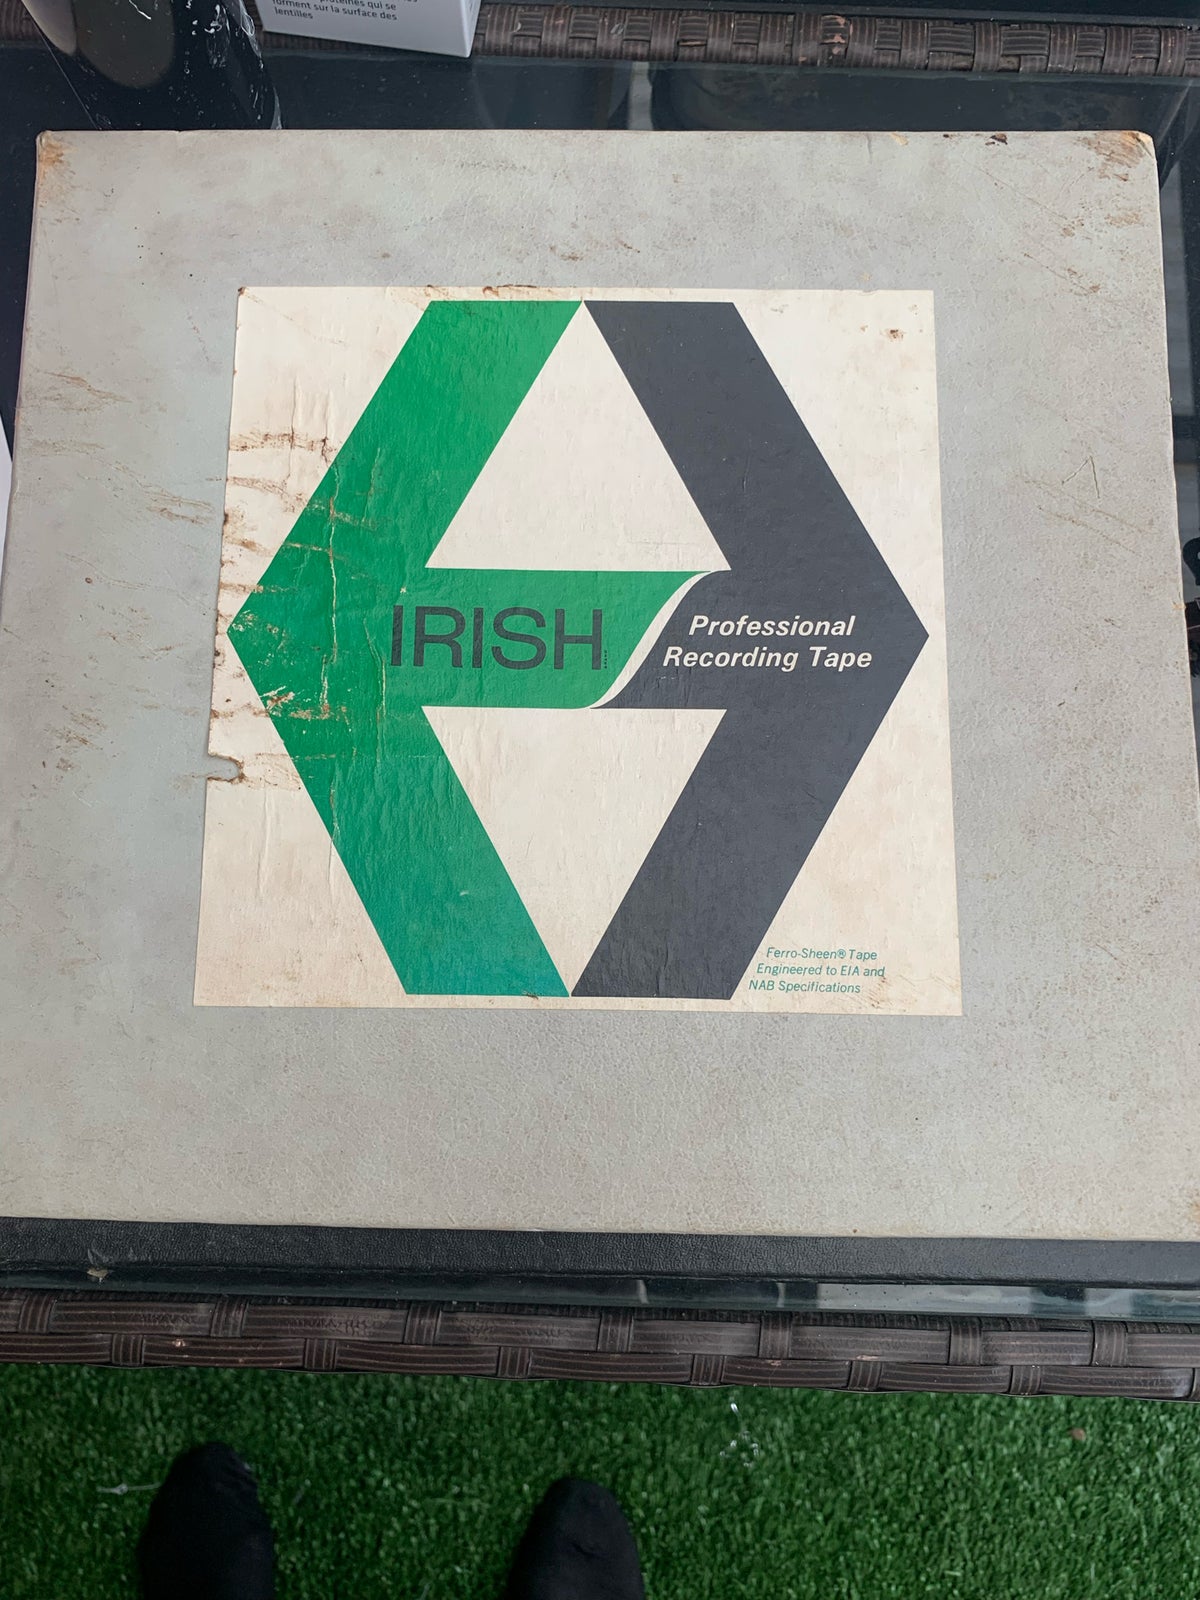 Spolebåndoptager, Andet, Irish recording tape